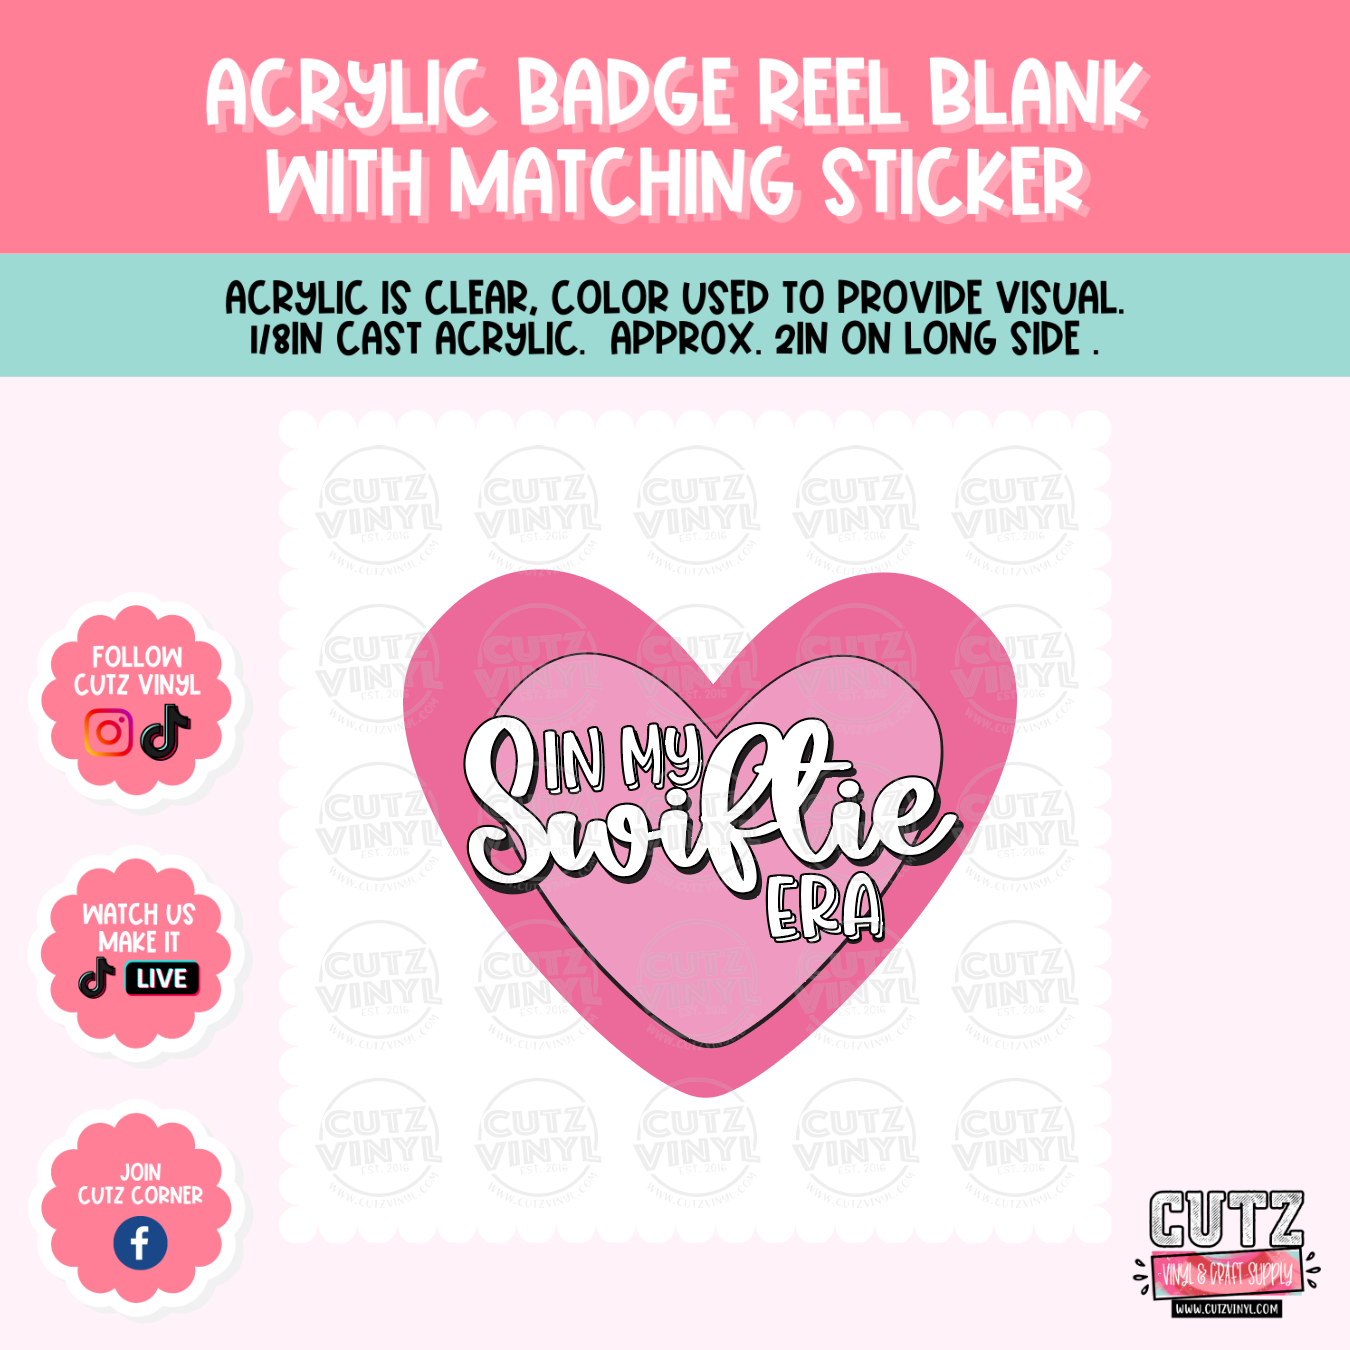 Swiftie Era Heart - Acrylic Badge Reel Blank and Matching Sticker